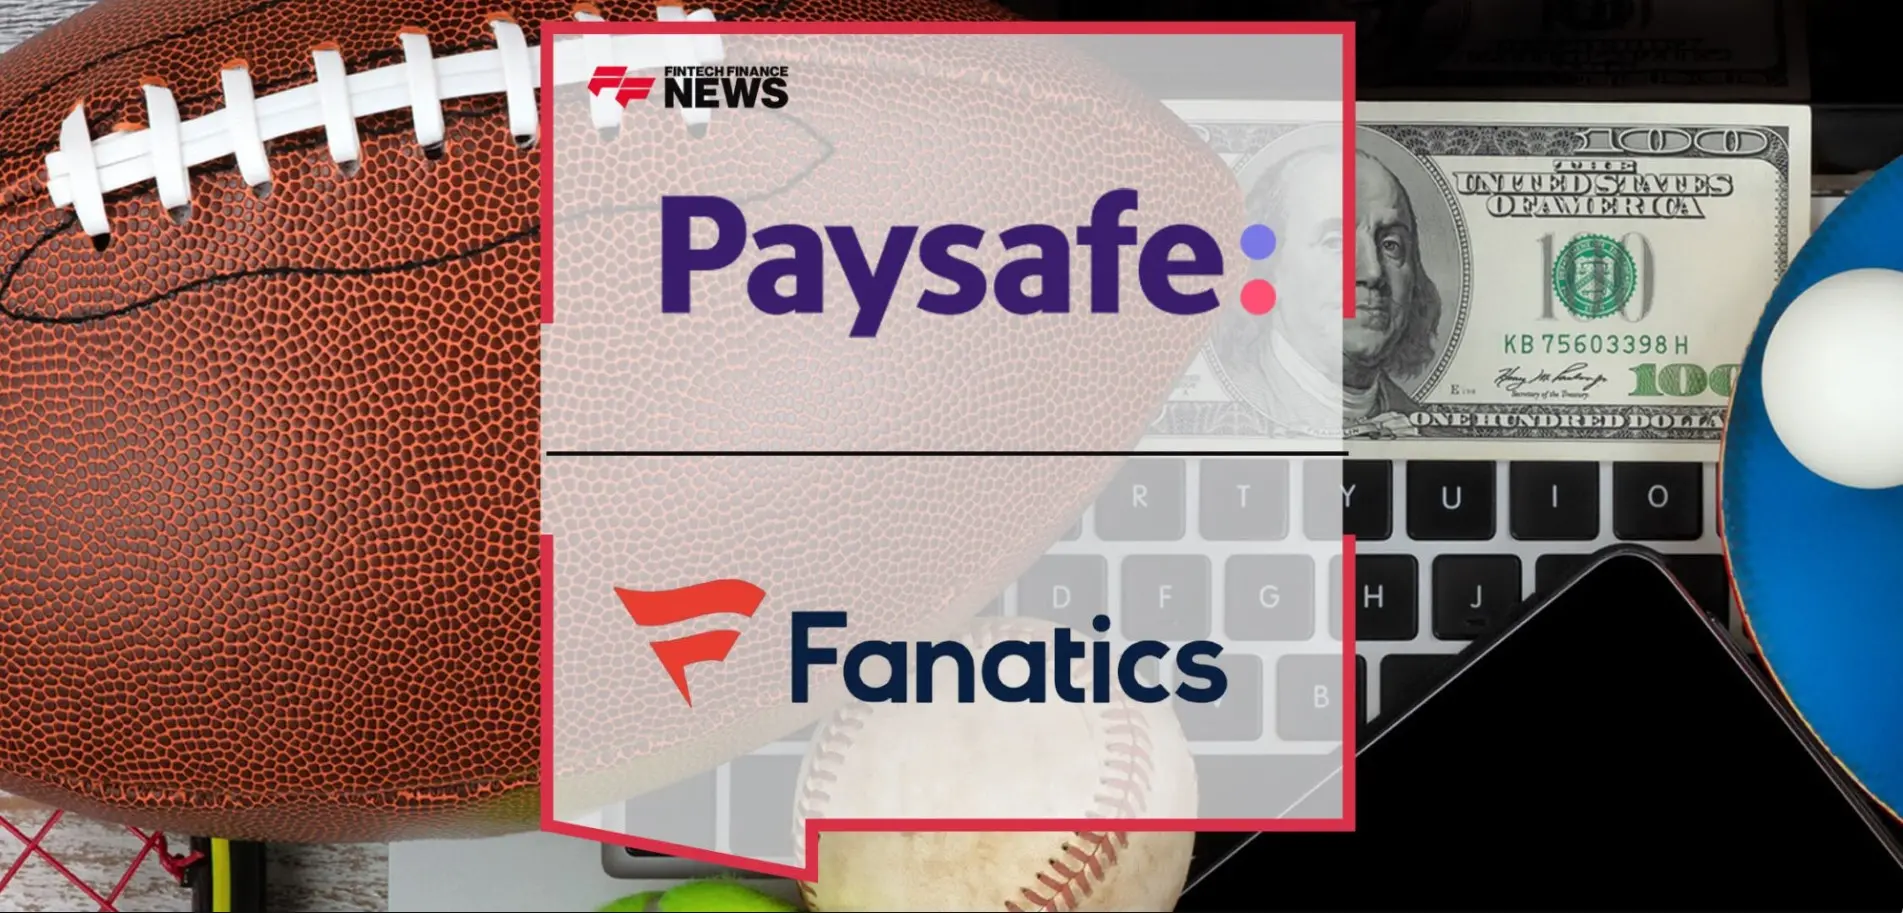 A Paysafe es a Fanatics Betting and Gaming Strategiai fizetesi jpg